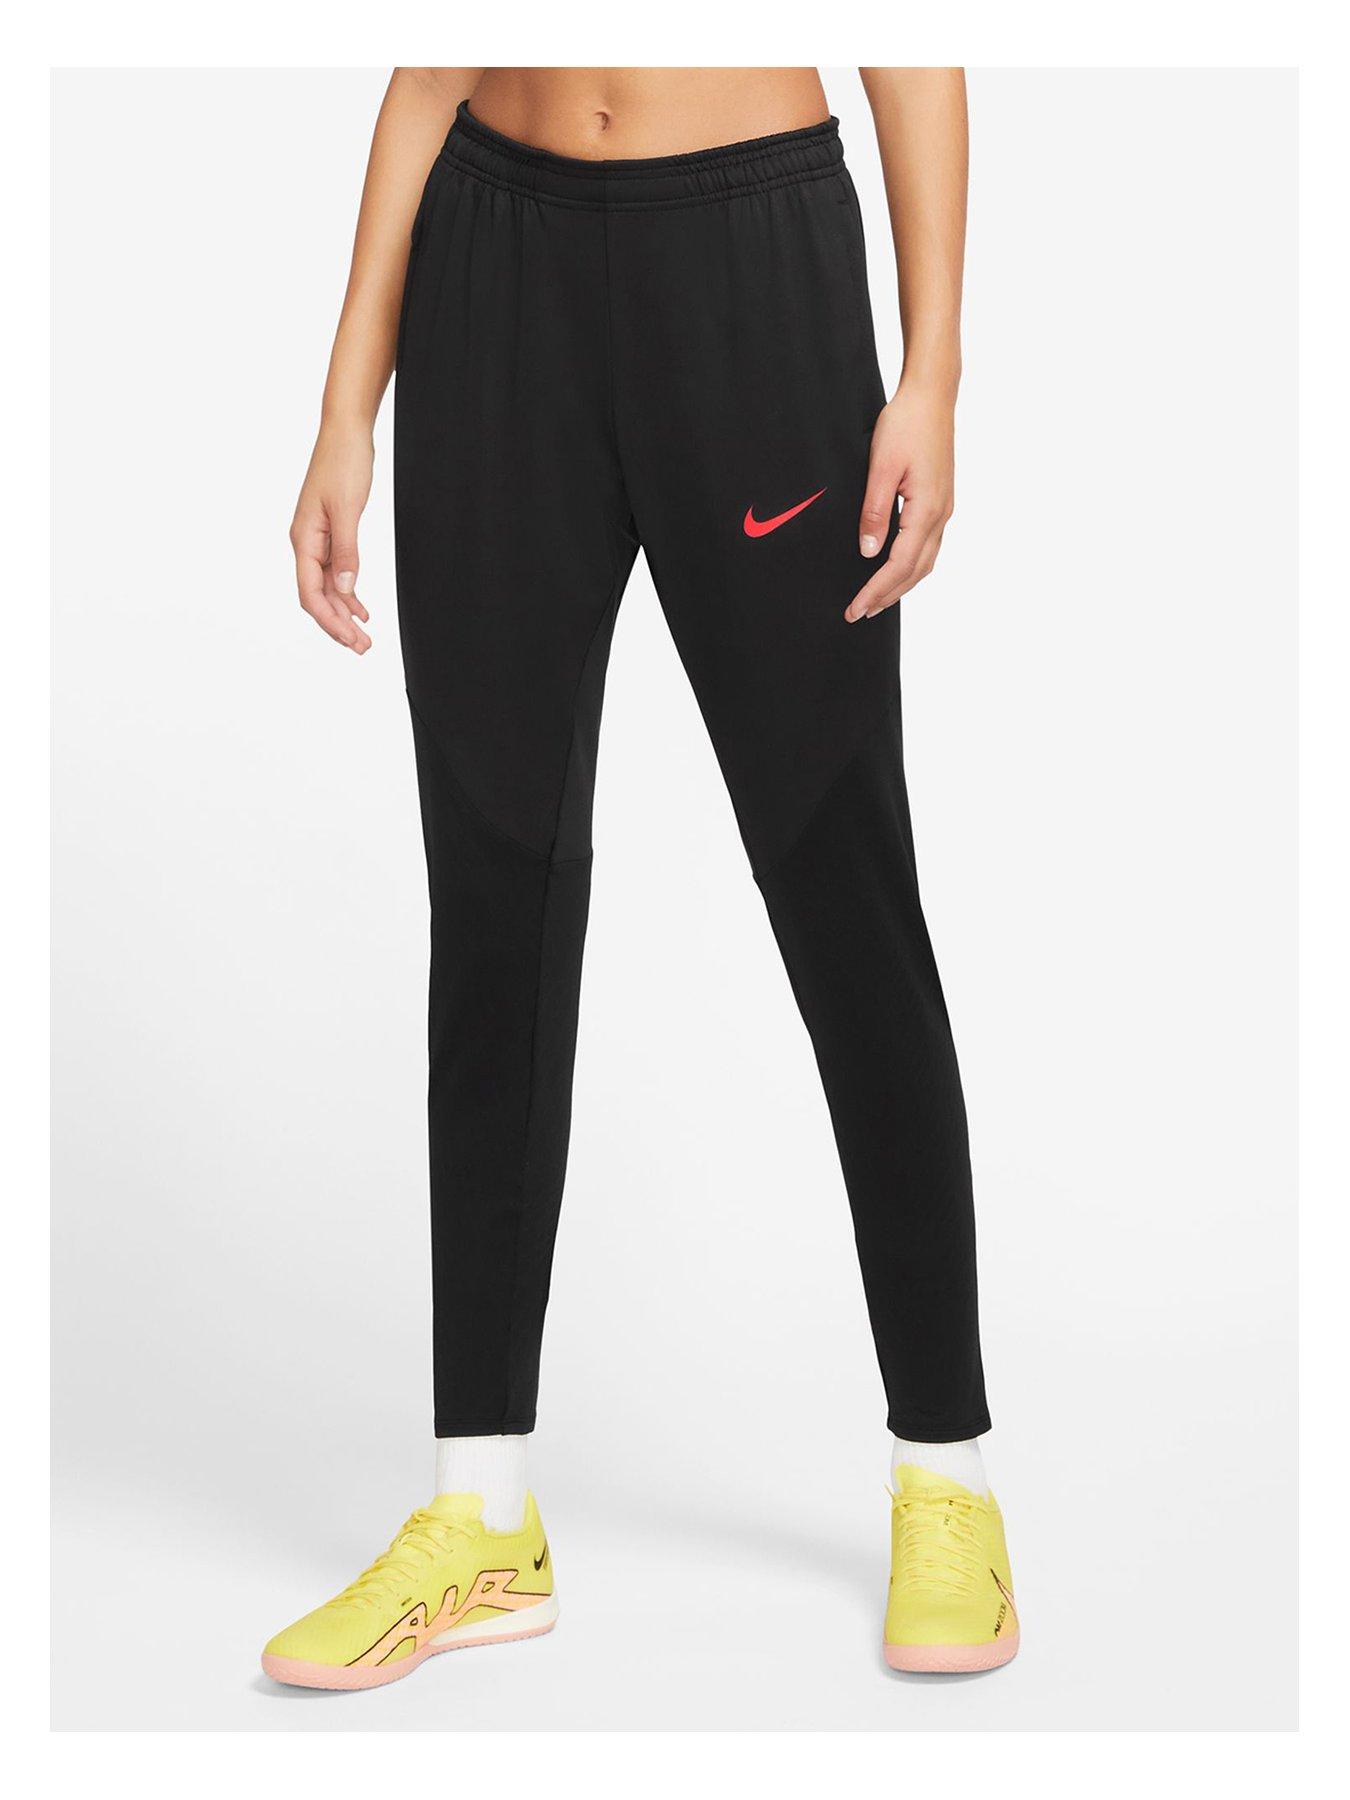 Nike Women's Speed Dri-fit Mesh-Twist Running Leggings Black